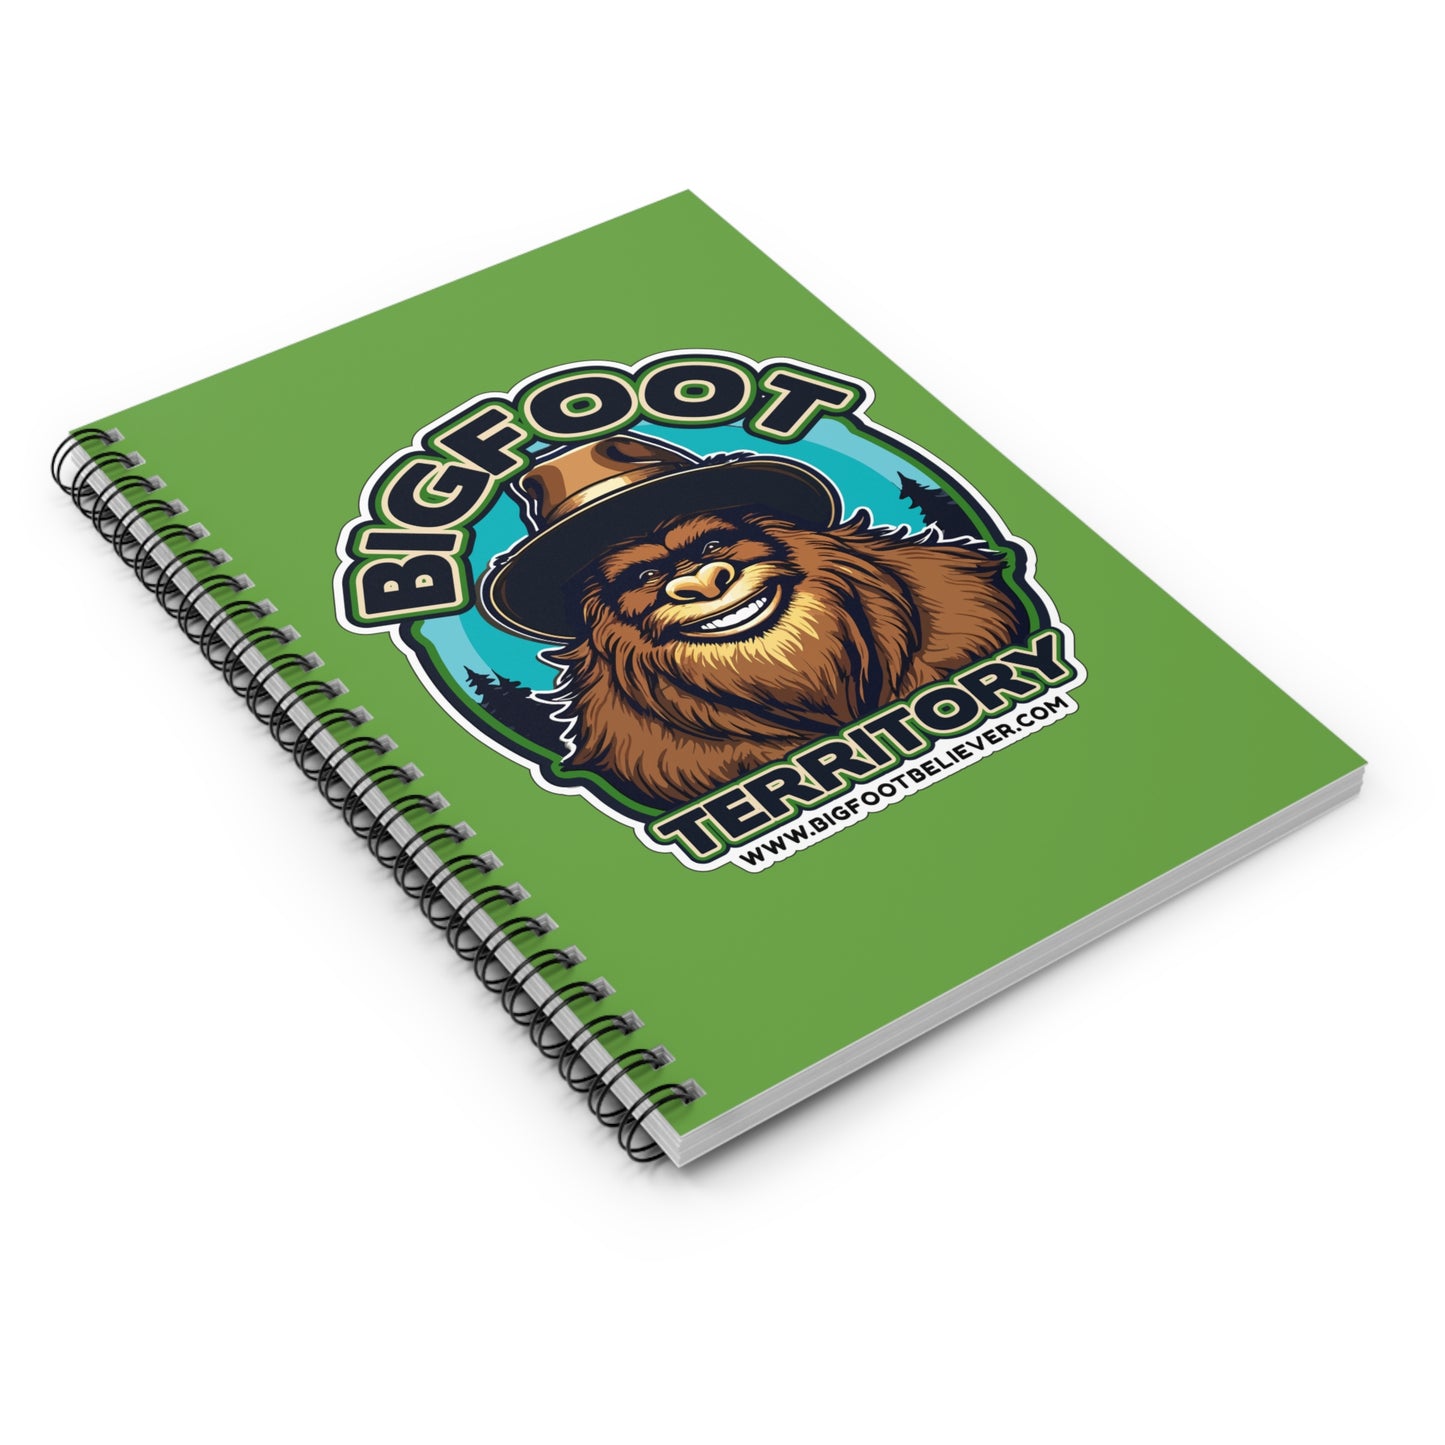 Bigfoot Territory Spiral Notebook - Ruled Line